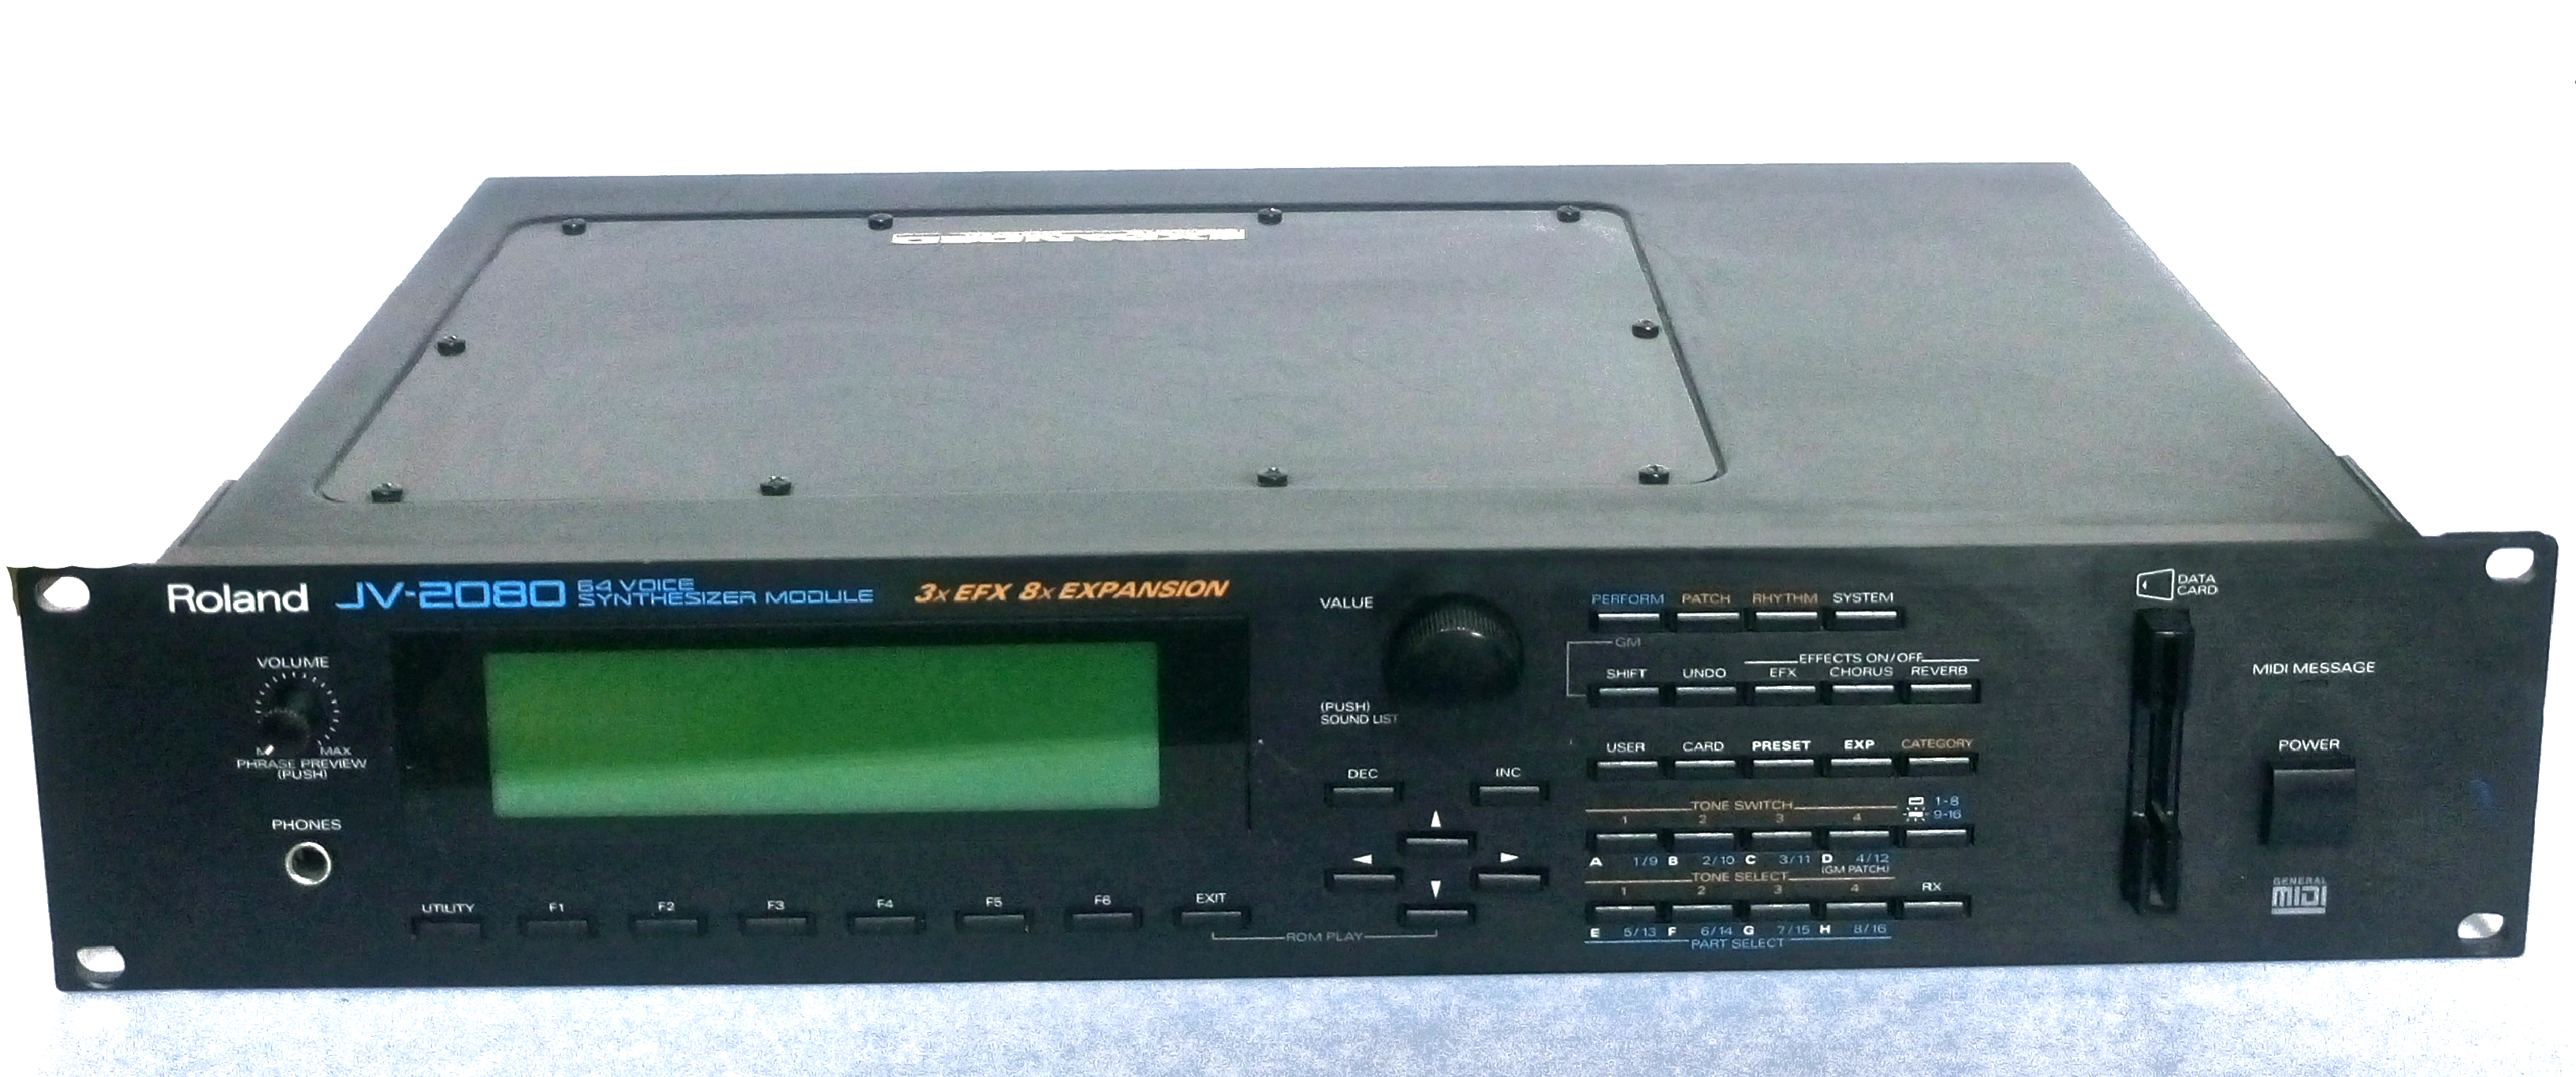 JV-2080 - Roland JV-2080 - Audiofanzine